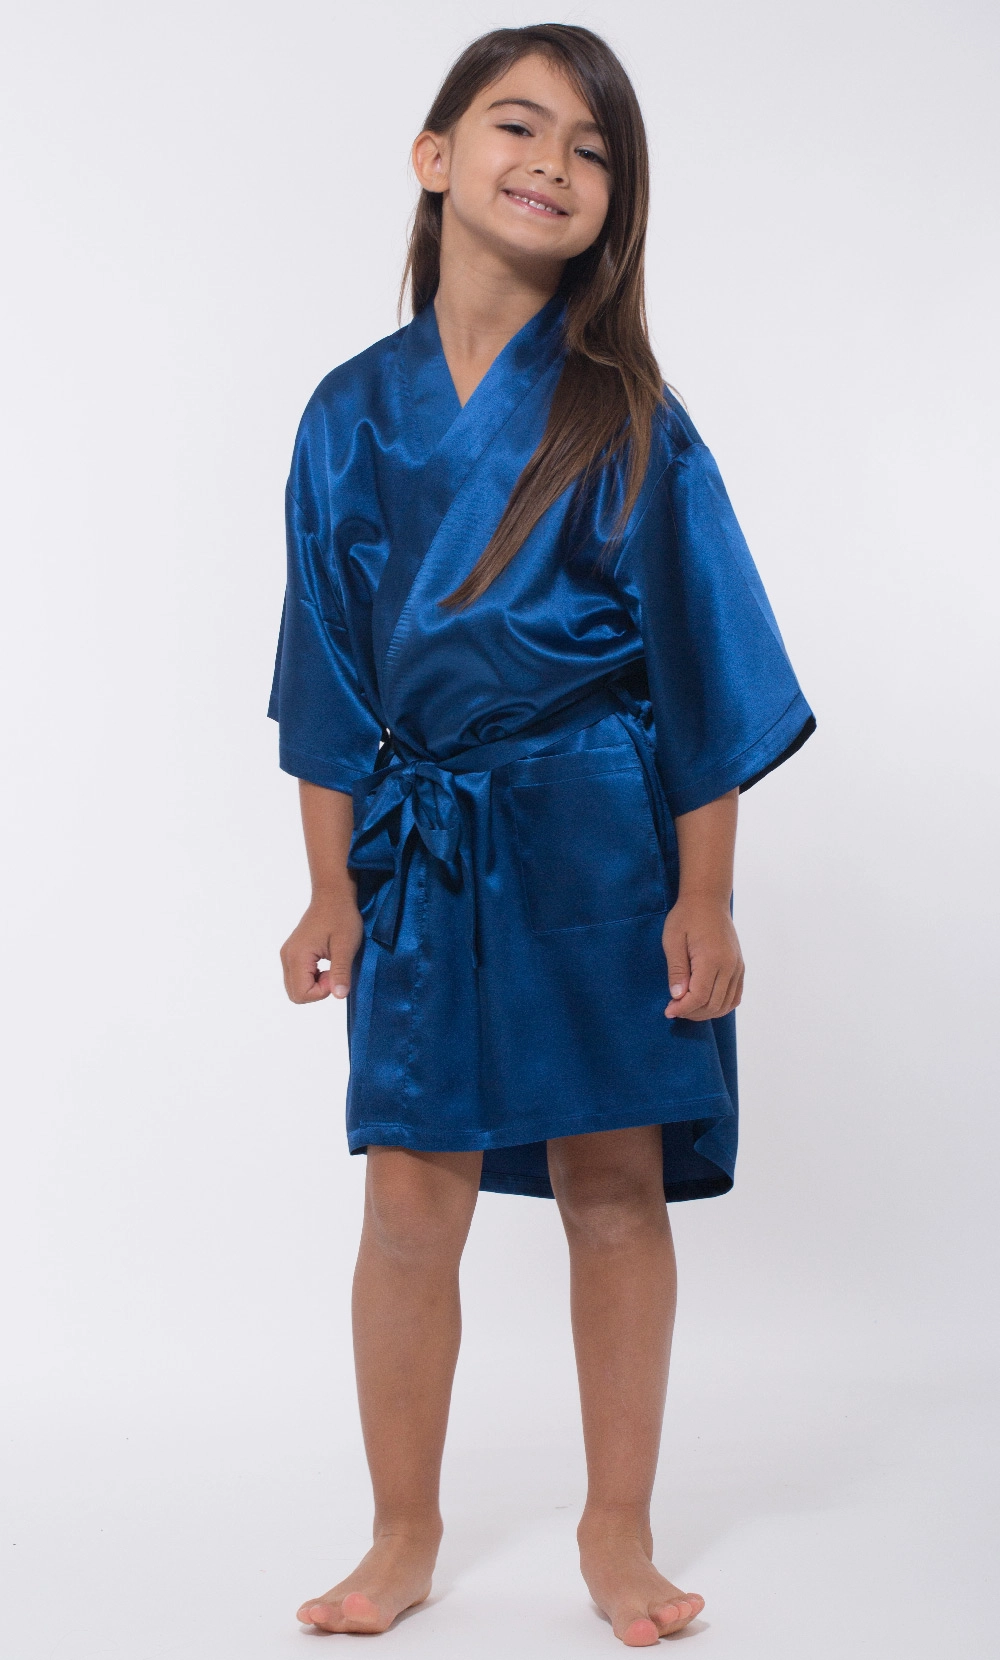 Kids Robes :: Kids Satin Robes :: Pink Satin Kimono Kid's Robe - Wholesale  bathrobes, Spa robes, Kids robes, Cotton robes, Spa Slippers, Wholesale  Towels